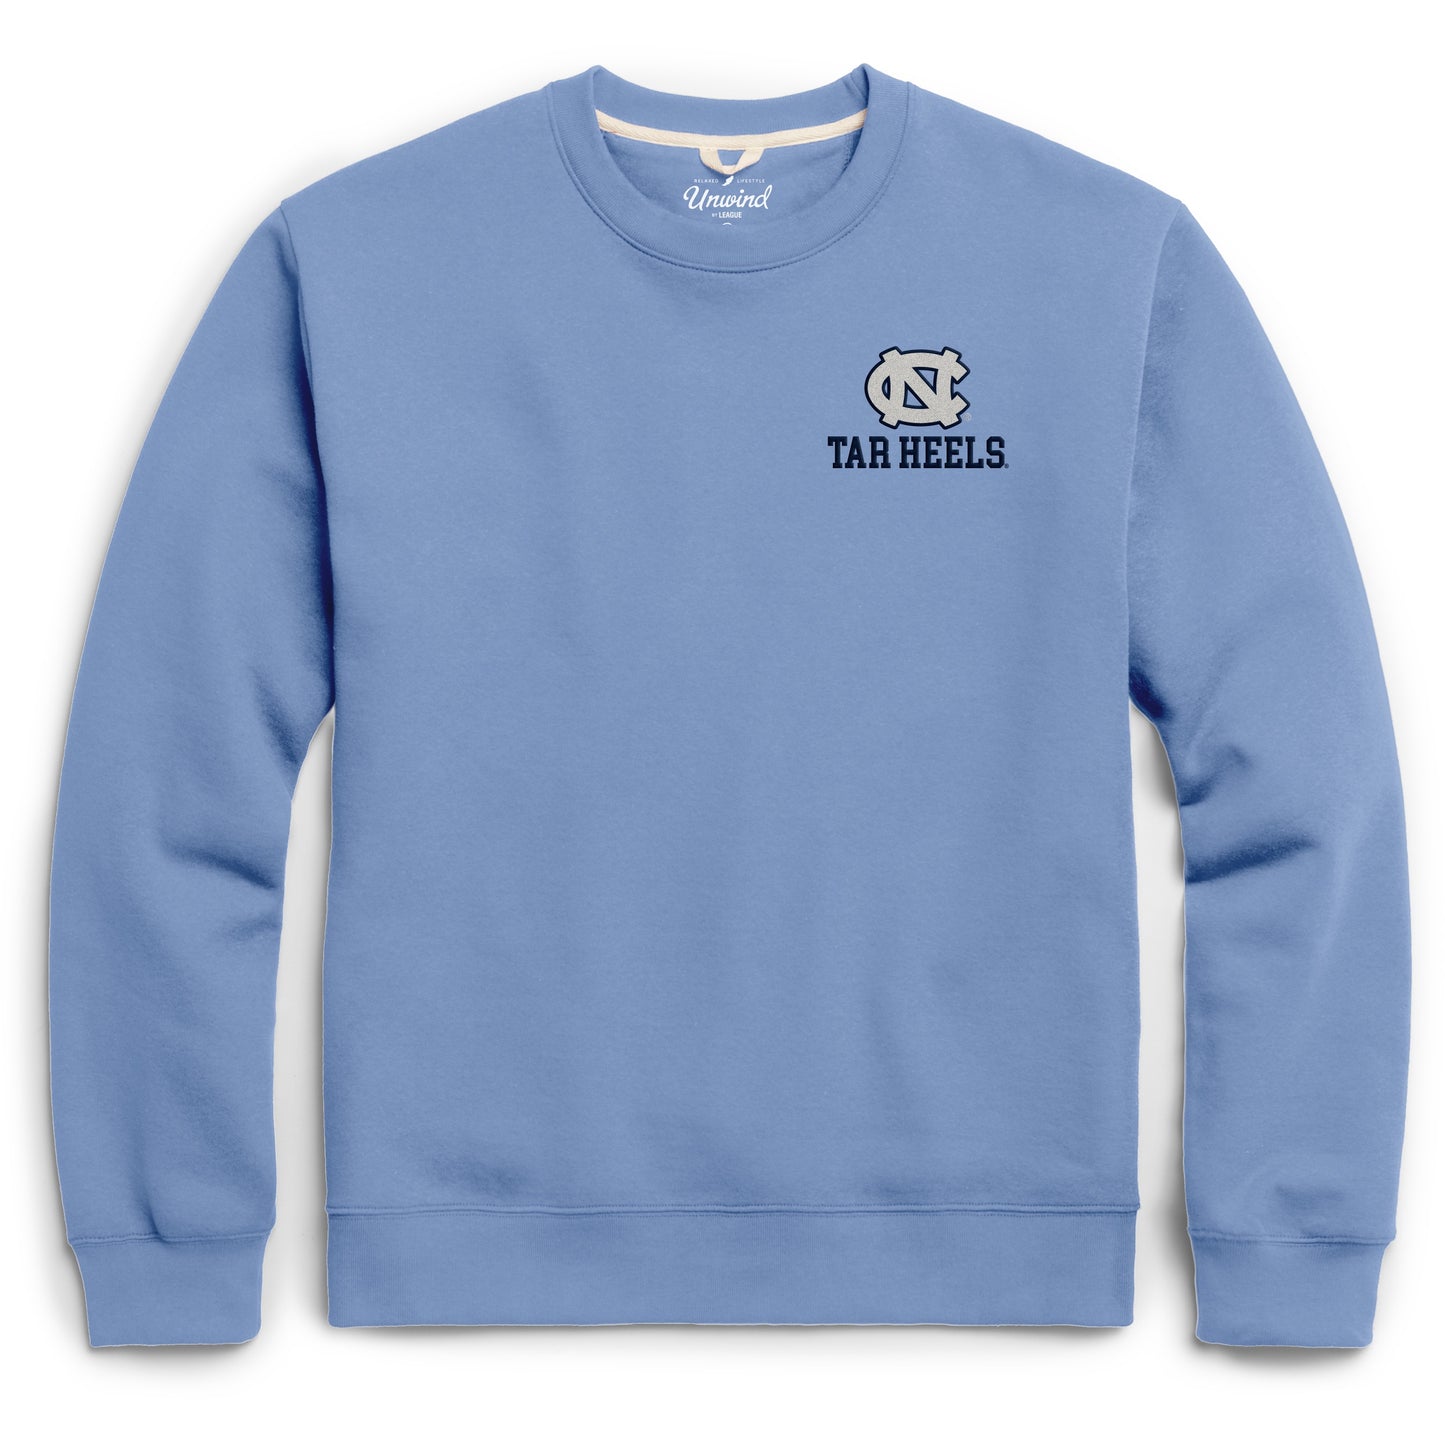 UNC Logo Crewneck Sweatshirt Carolina Blue with Embroidery